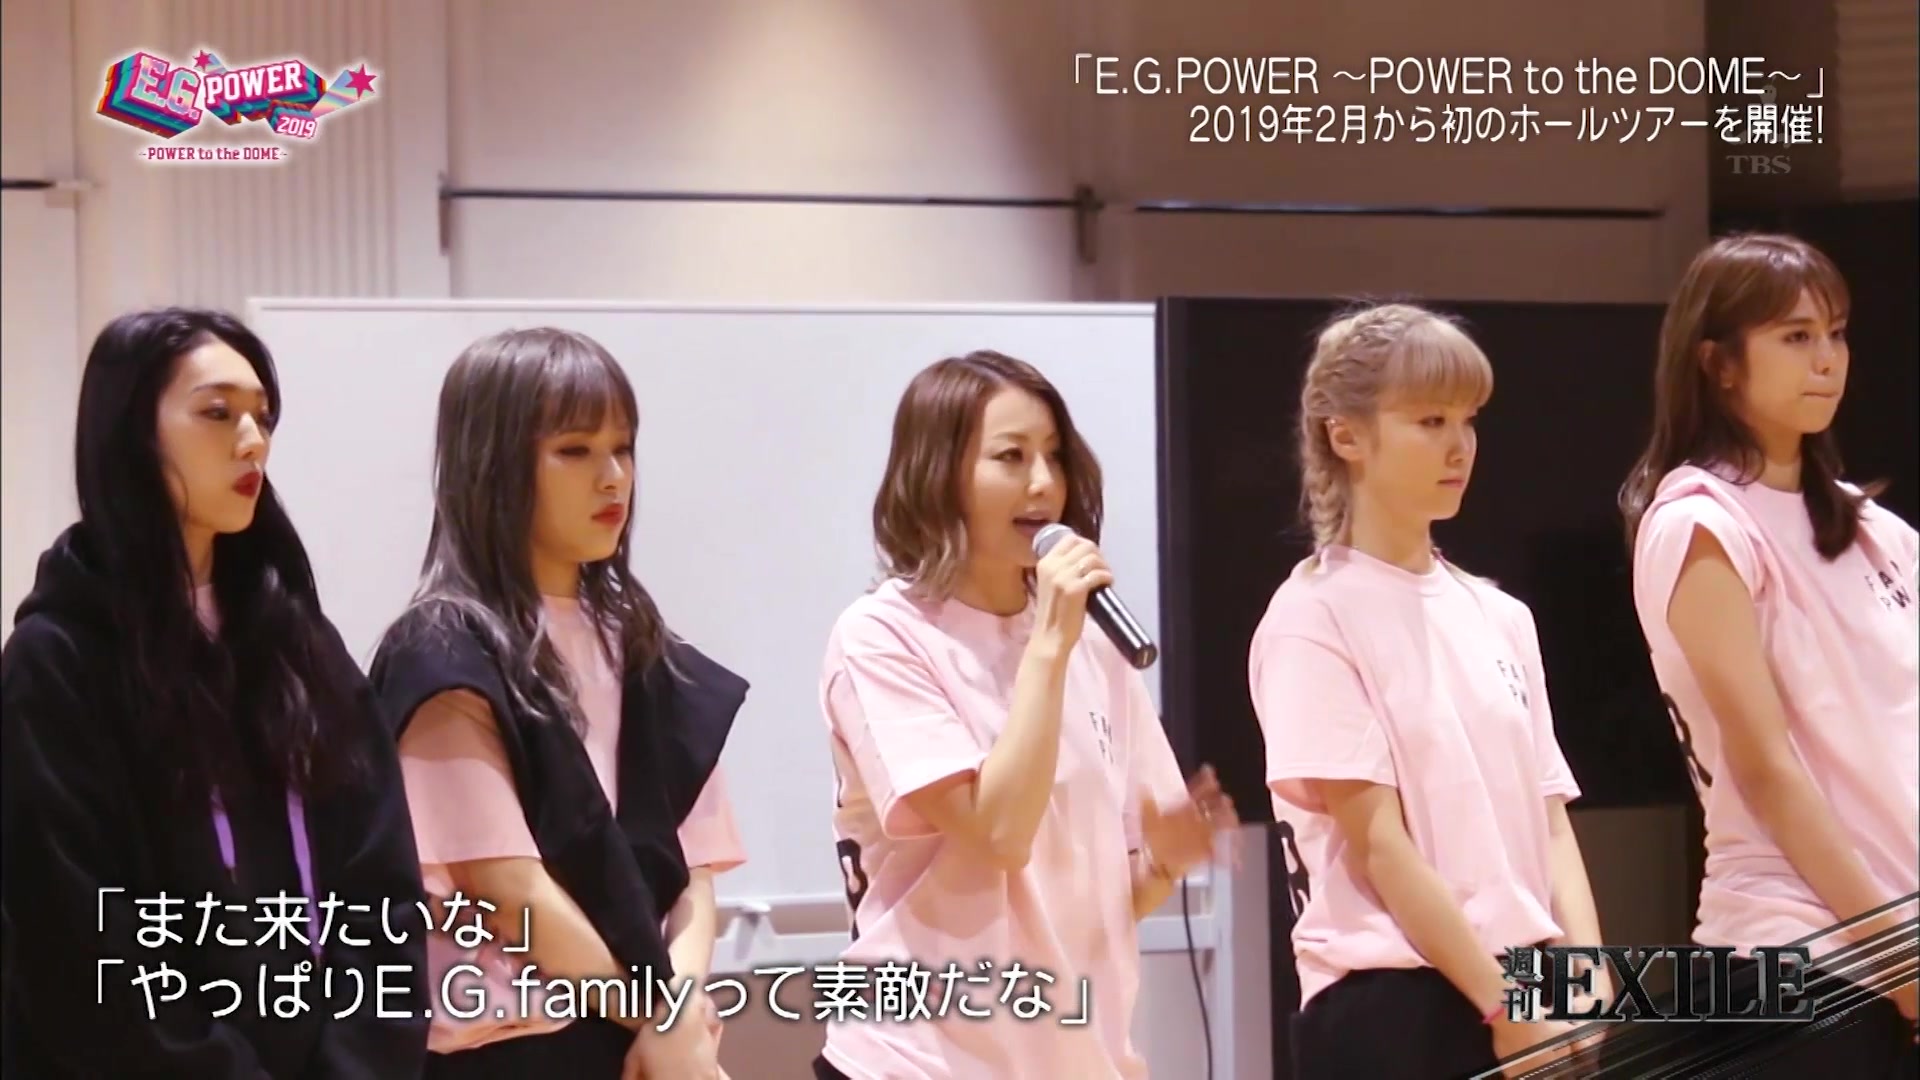 E Girls 週刊exile E G Power 2019 始動20181224 哔哩哔哩 つロ干杯 Bilibili